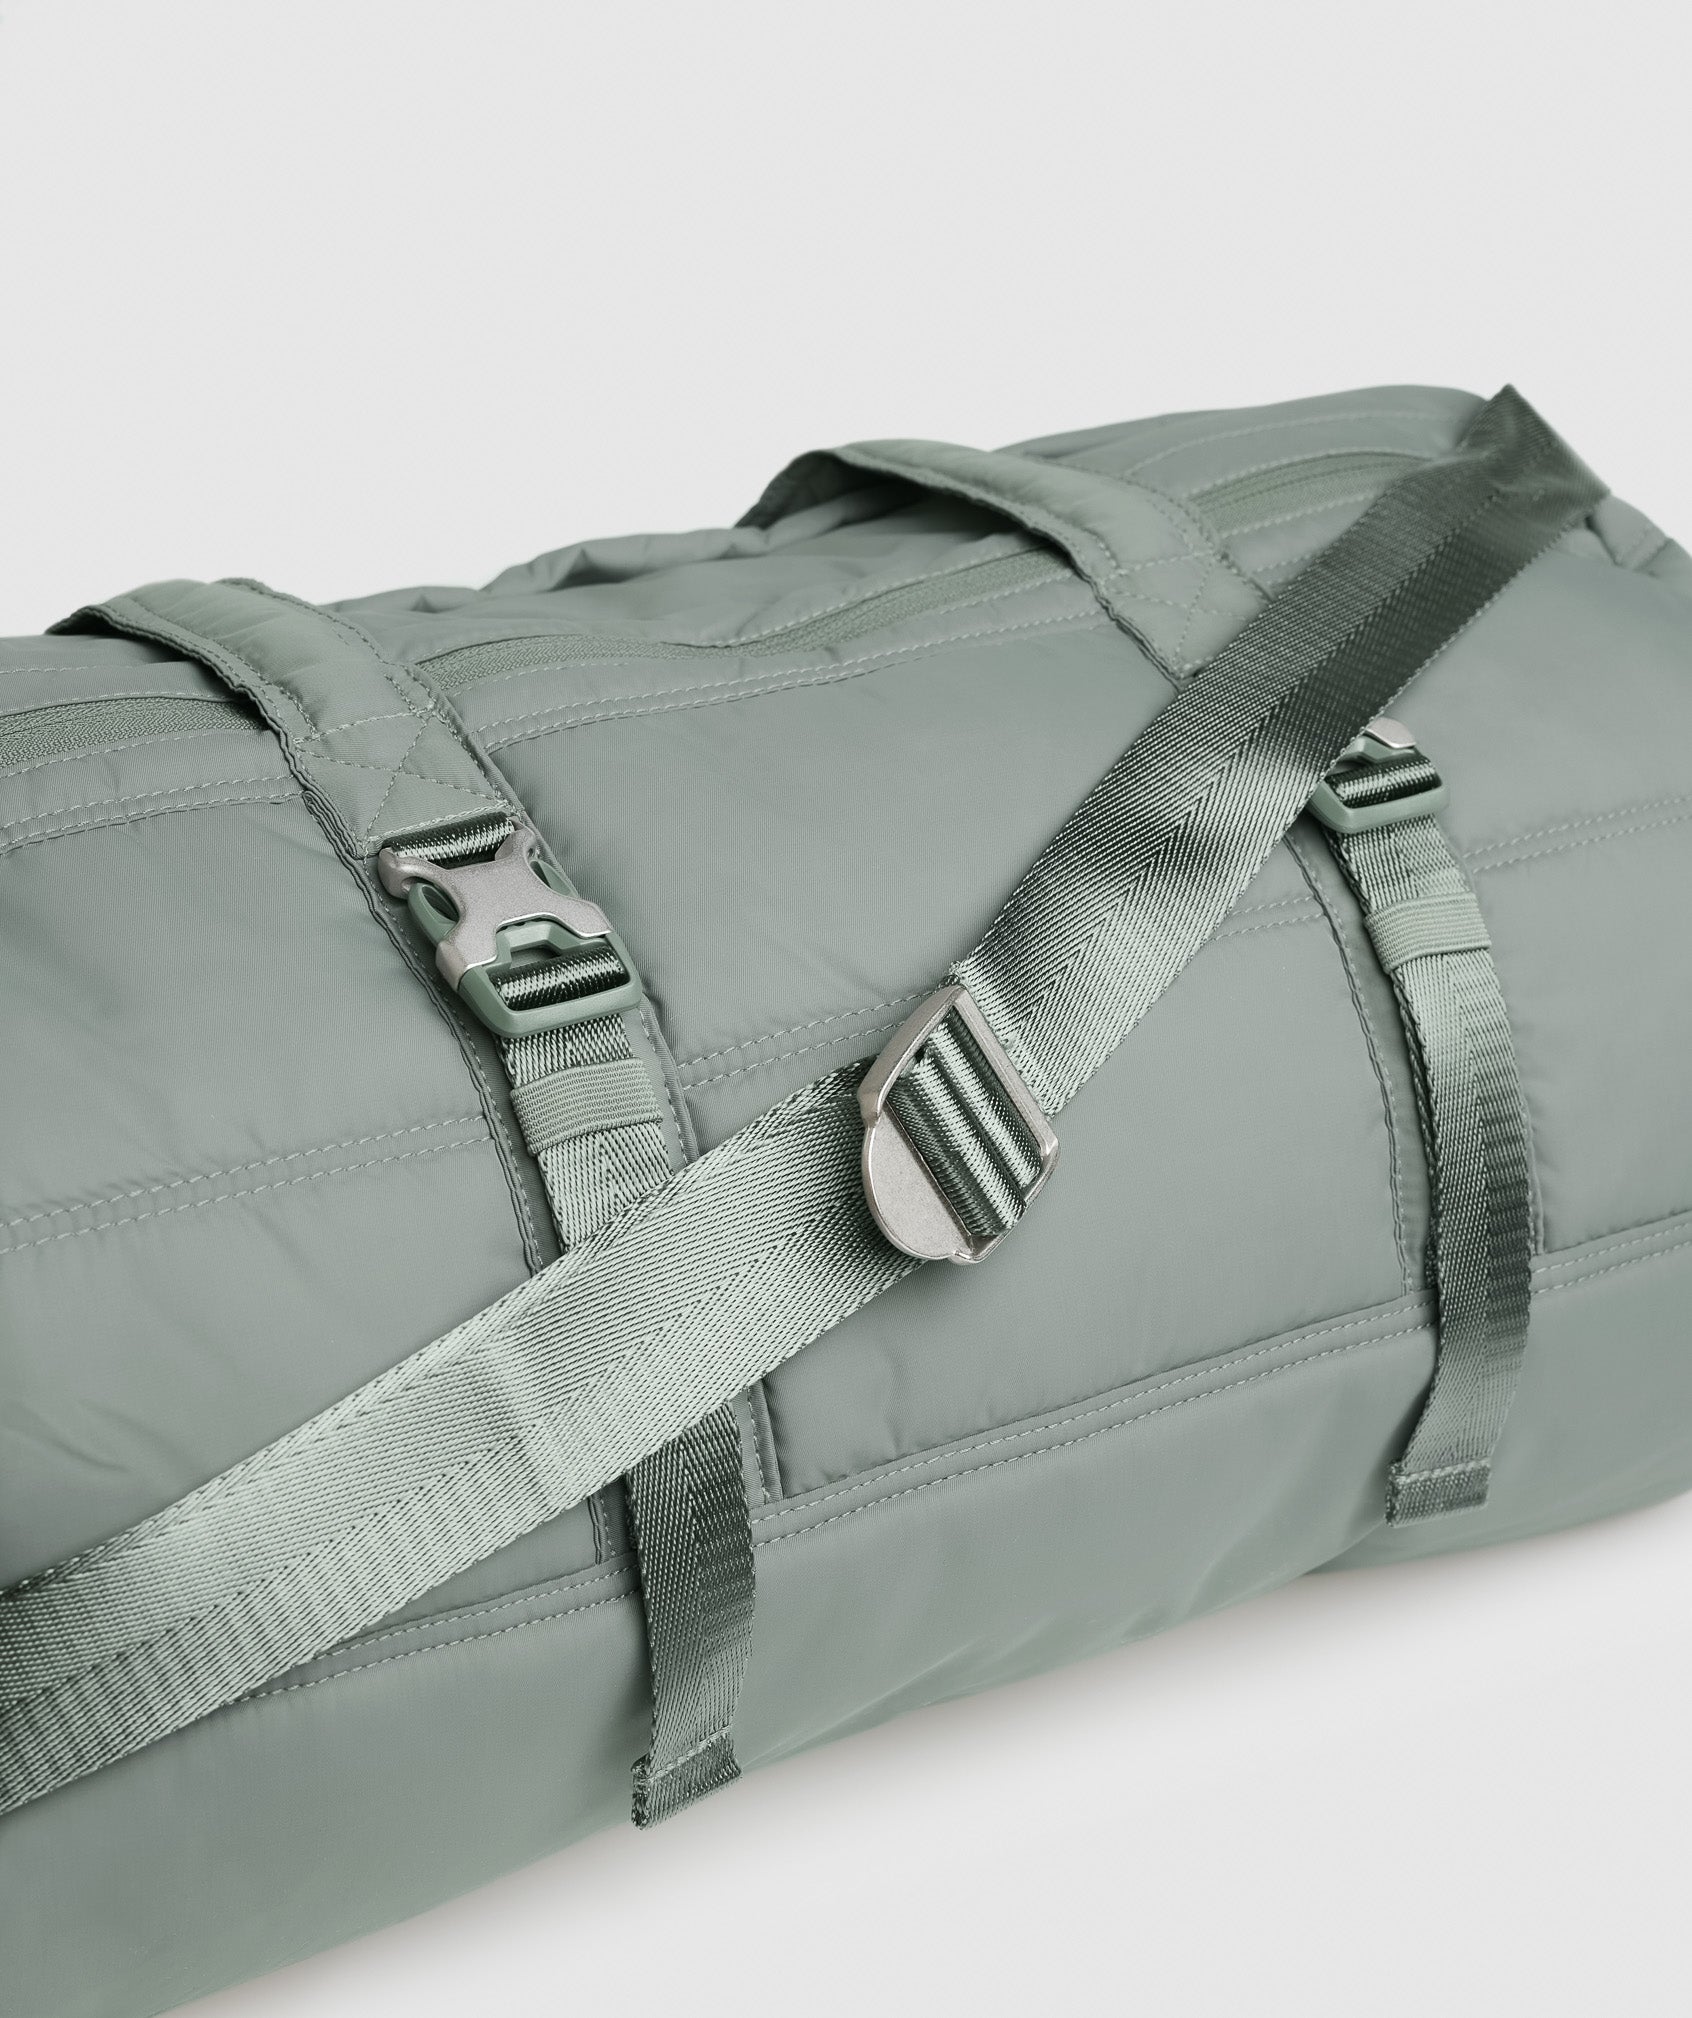 Premium Lifestyle Barrel Bag in Dusk Green - view 6